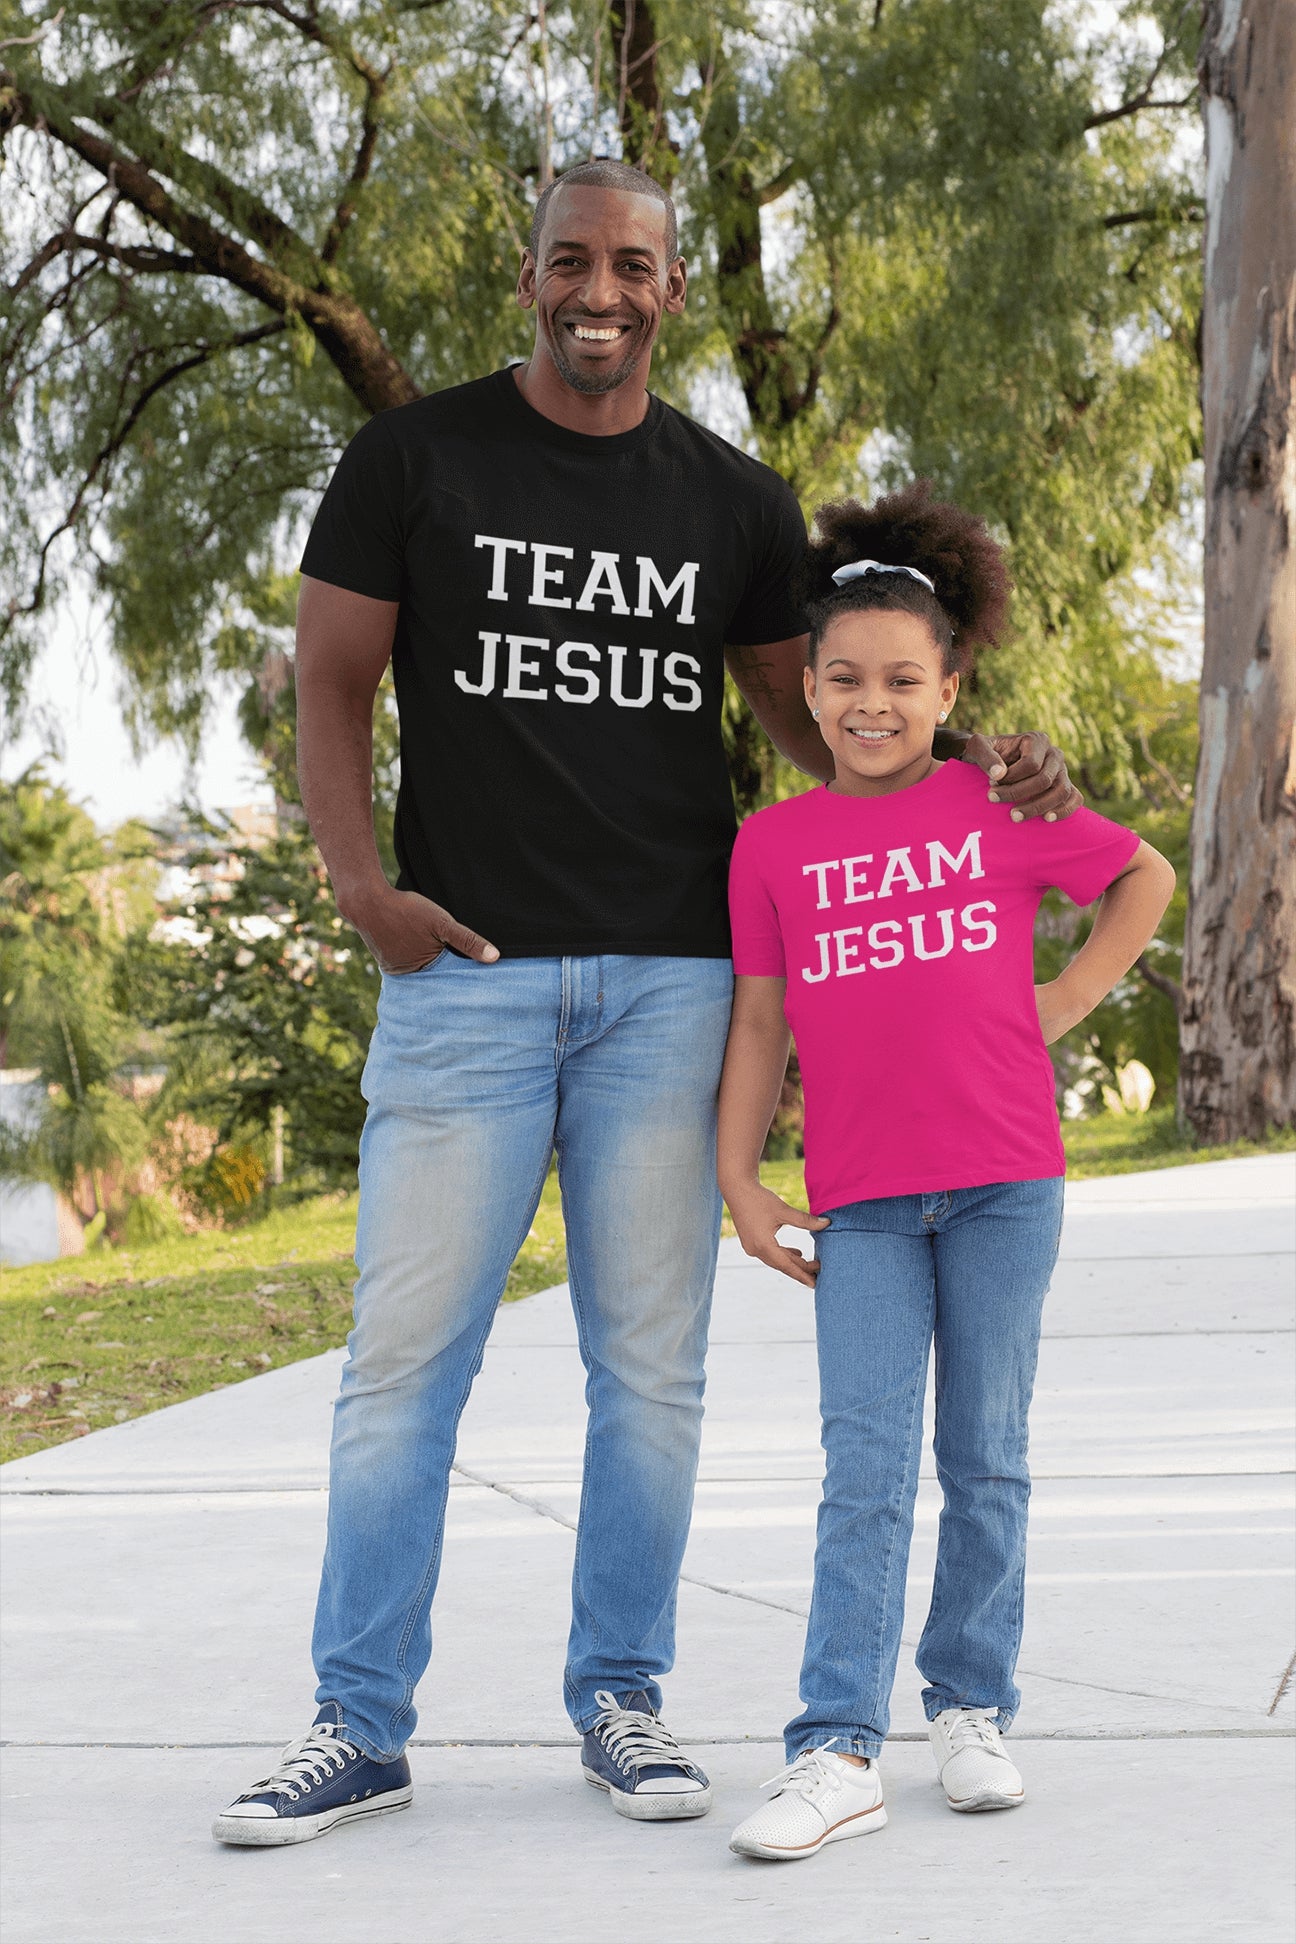 TEAM JESUS Adult T-Shirt (#589-1)